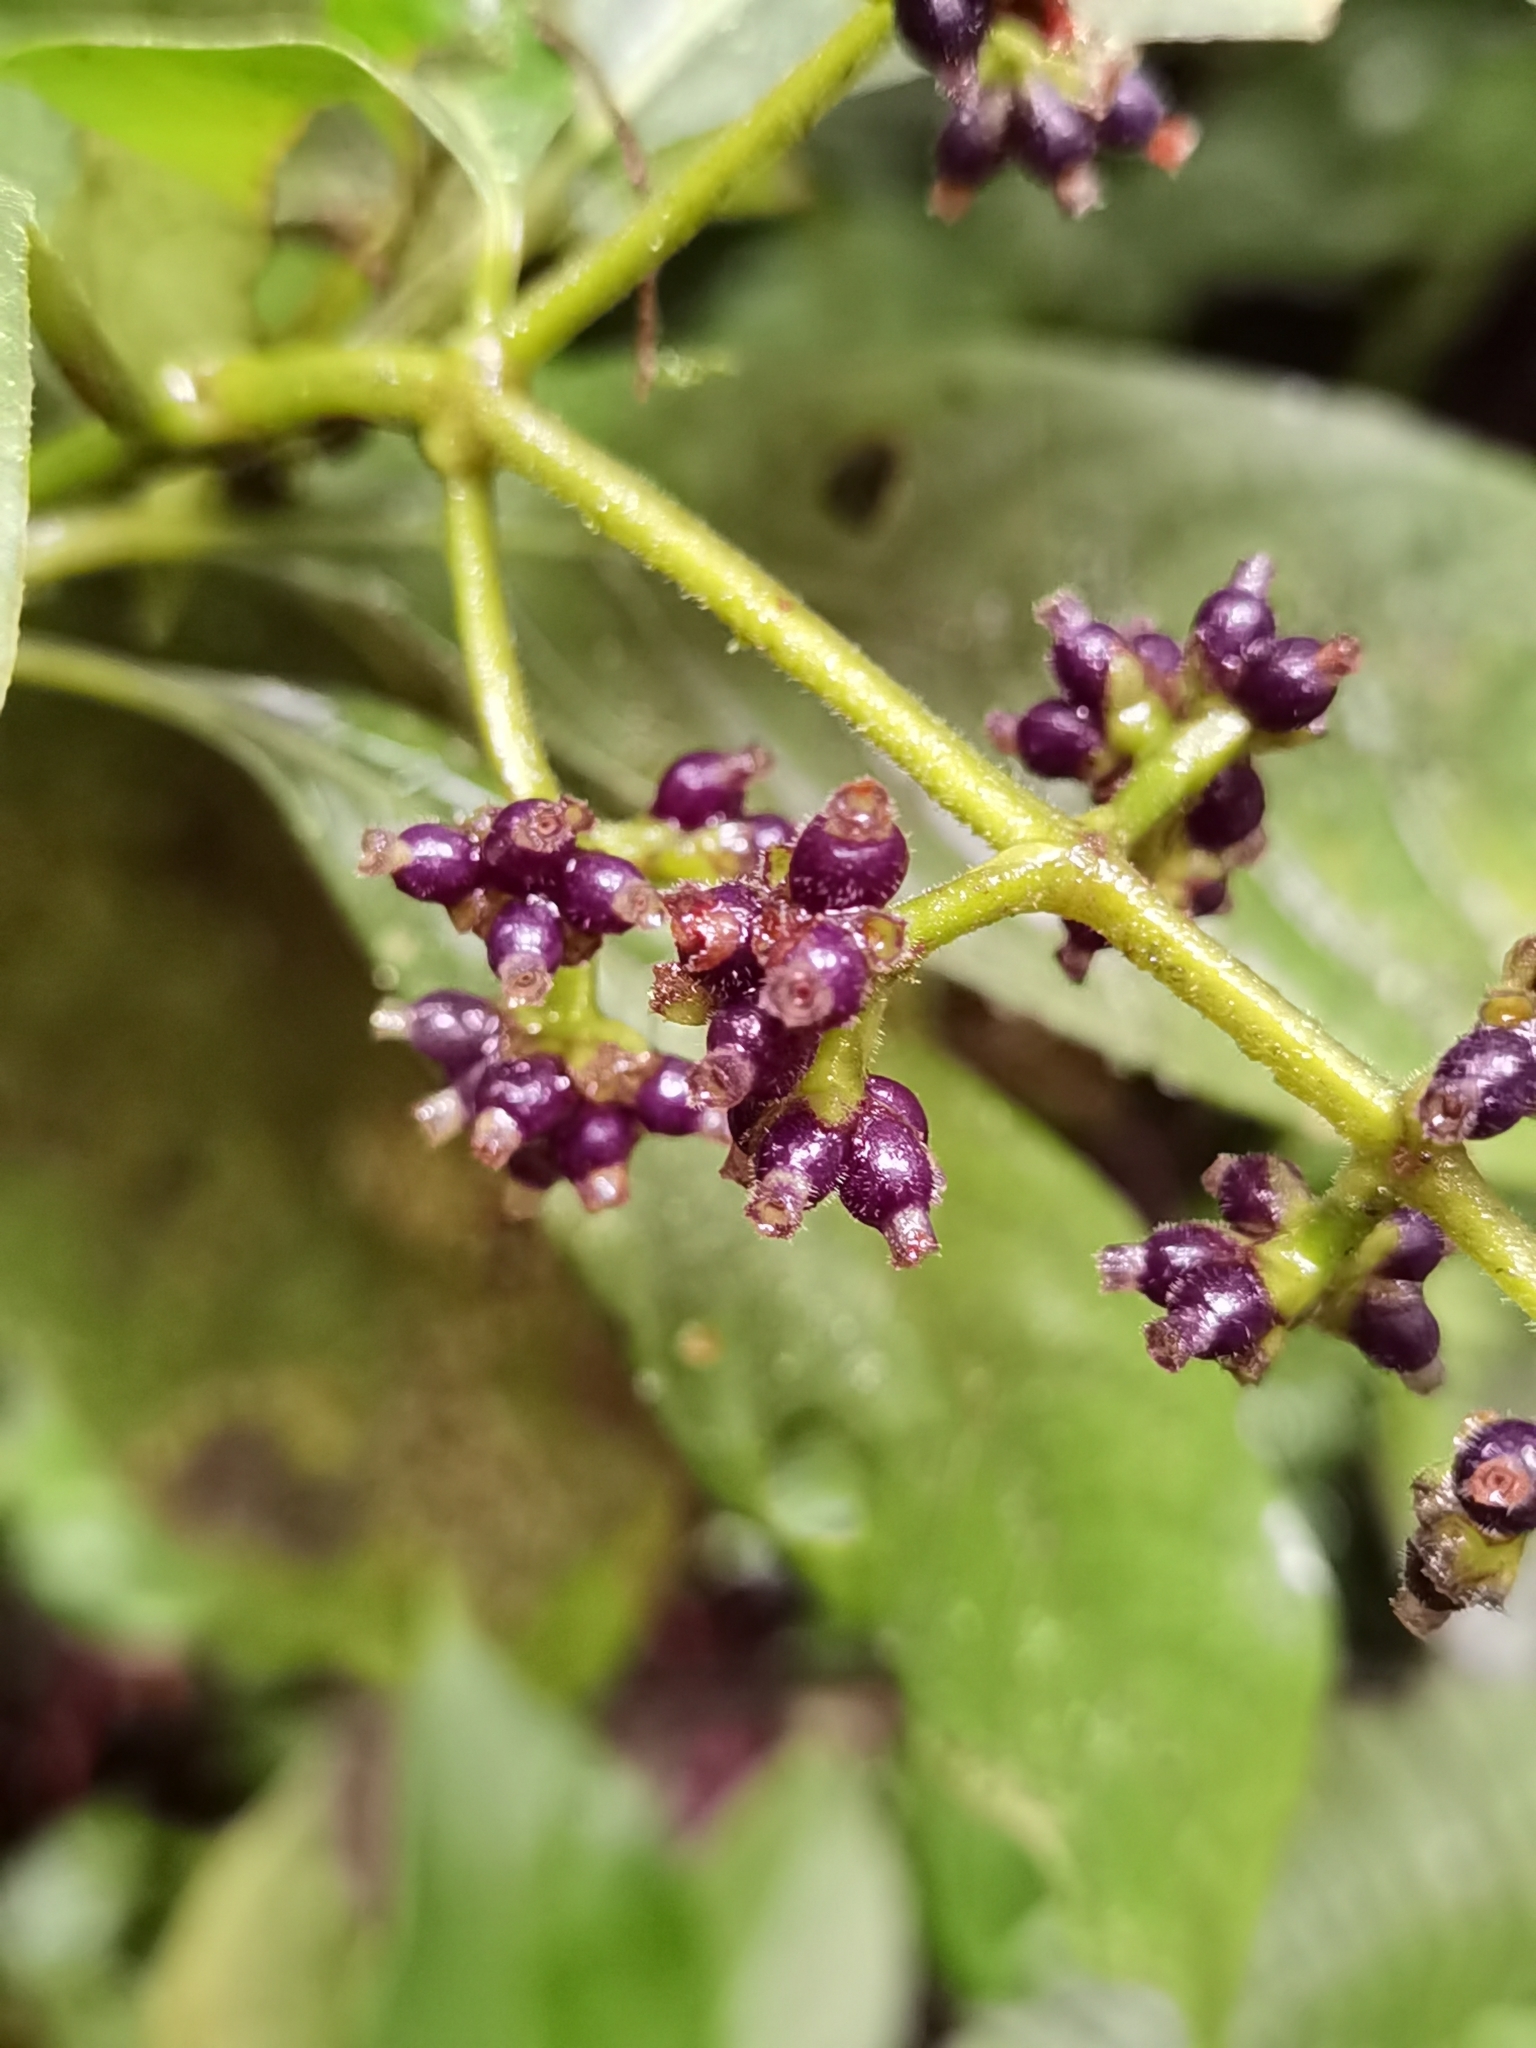 Psychotria image